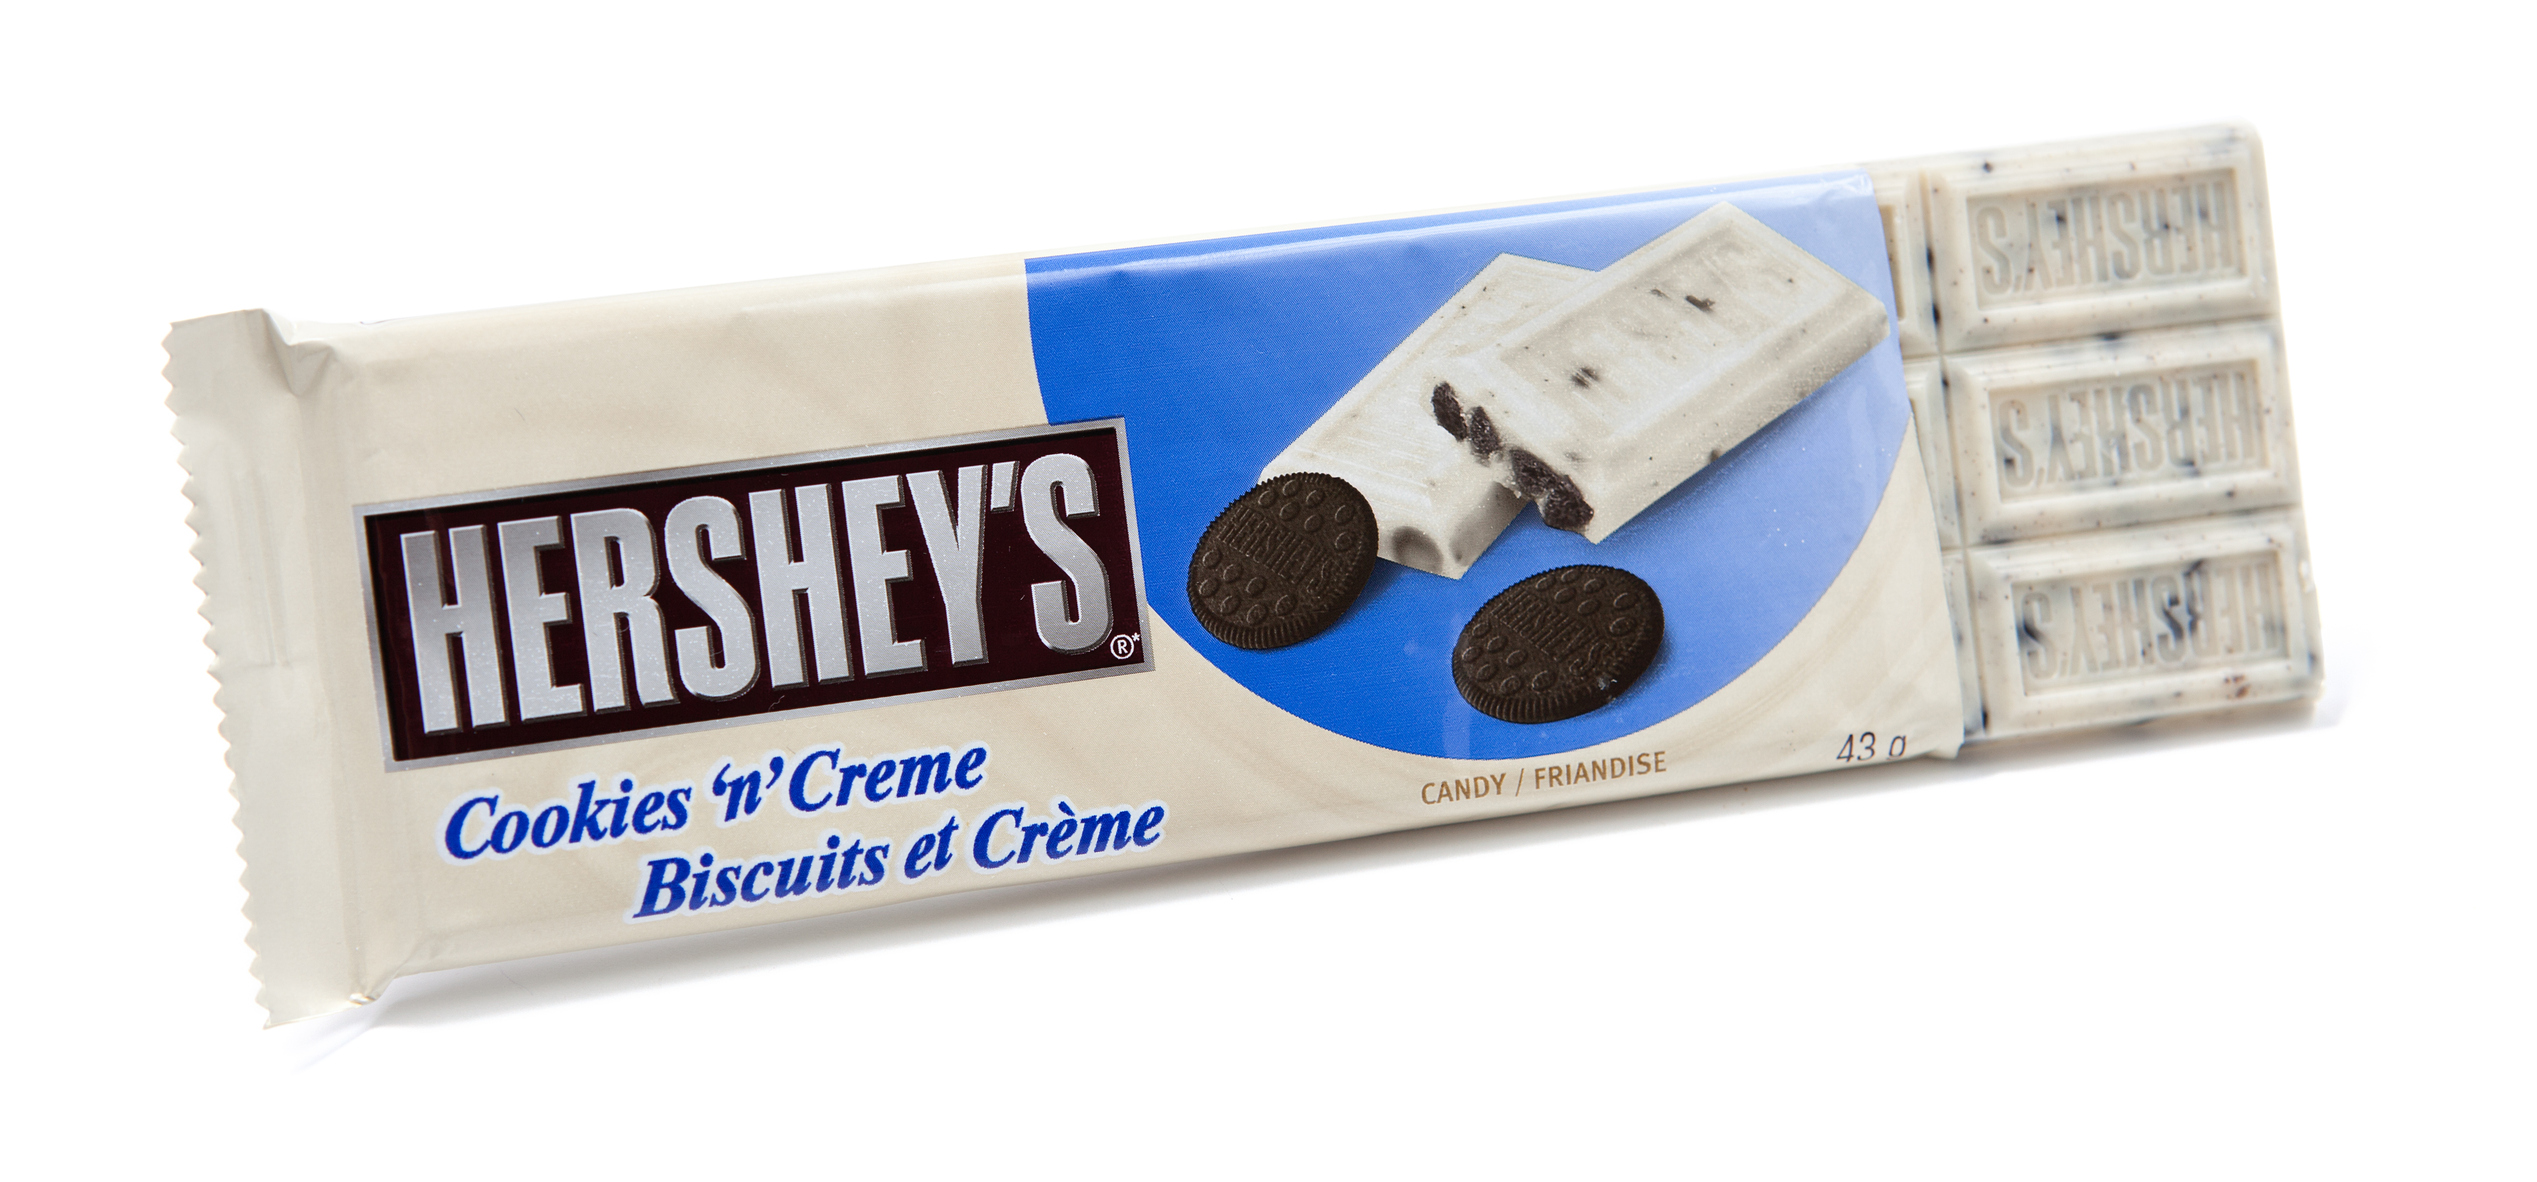 The Hershey's Cookies 'n' Cream Bar Is Severely Slept On